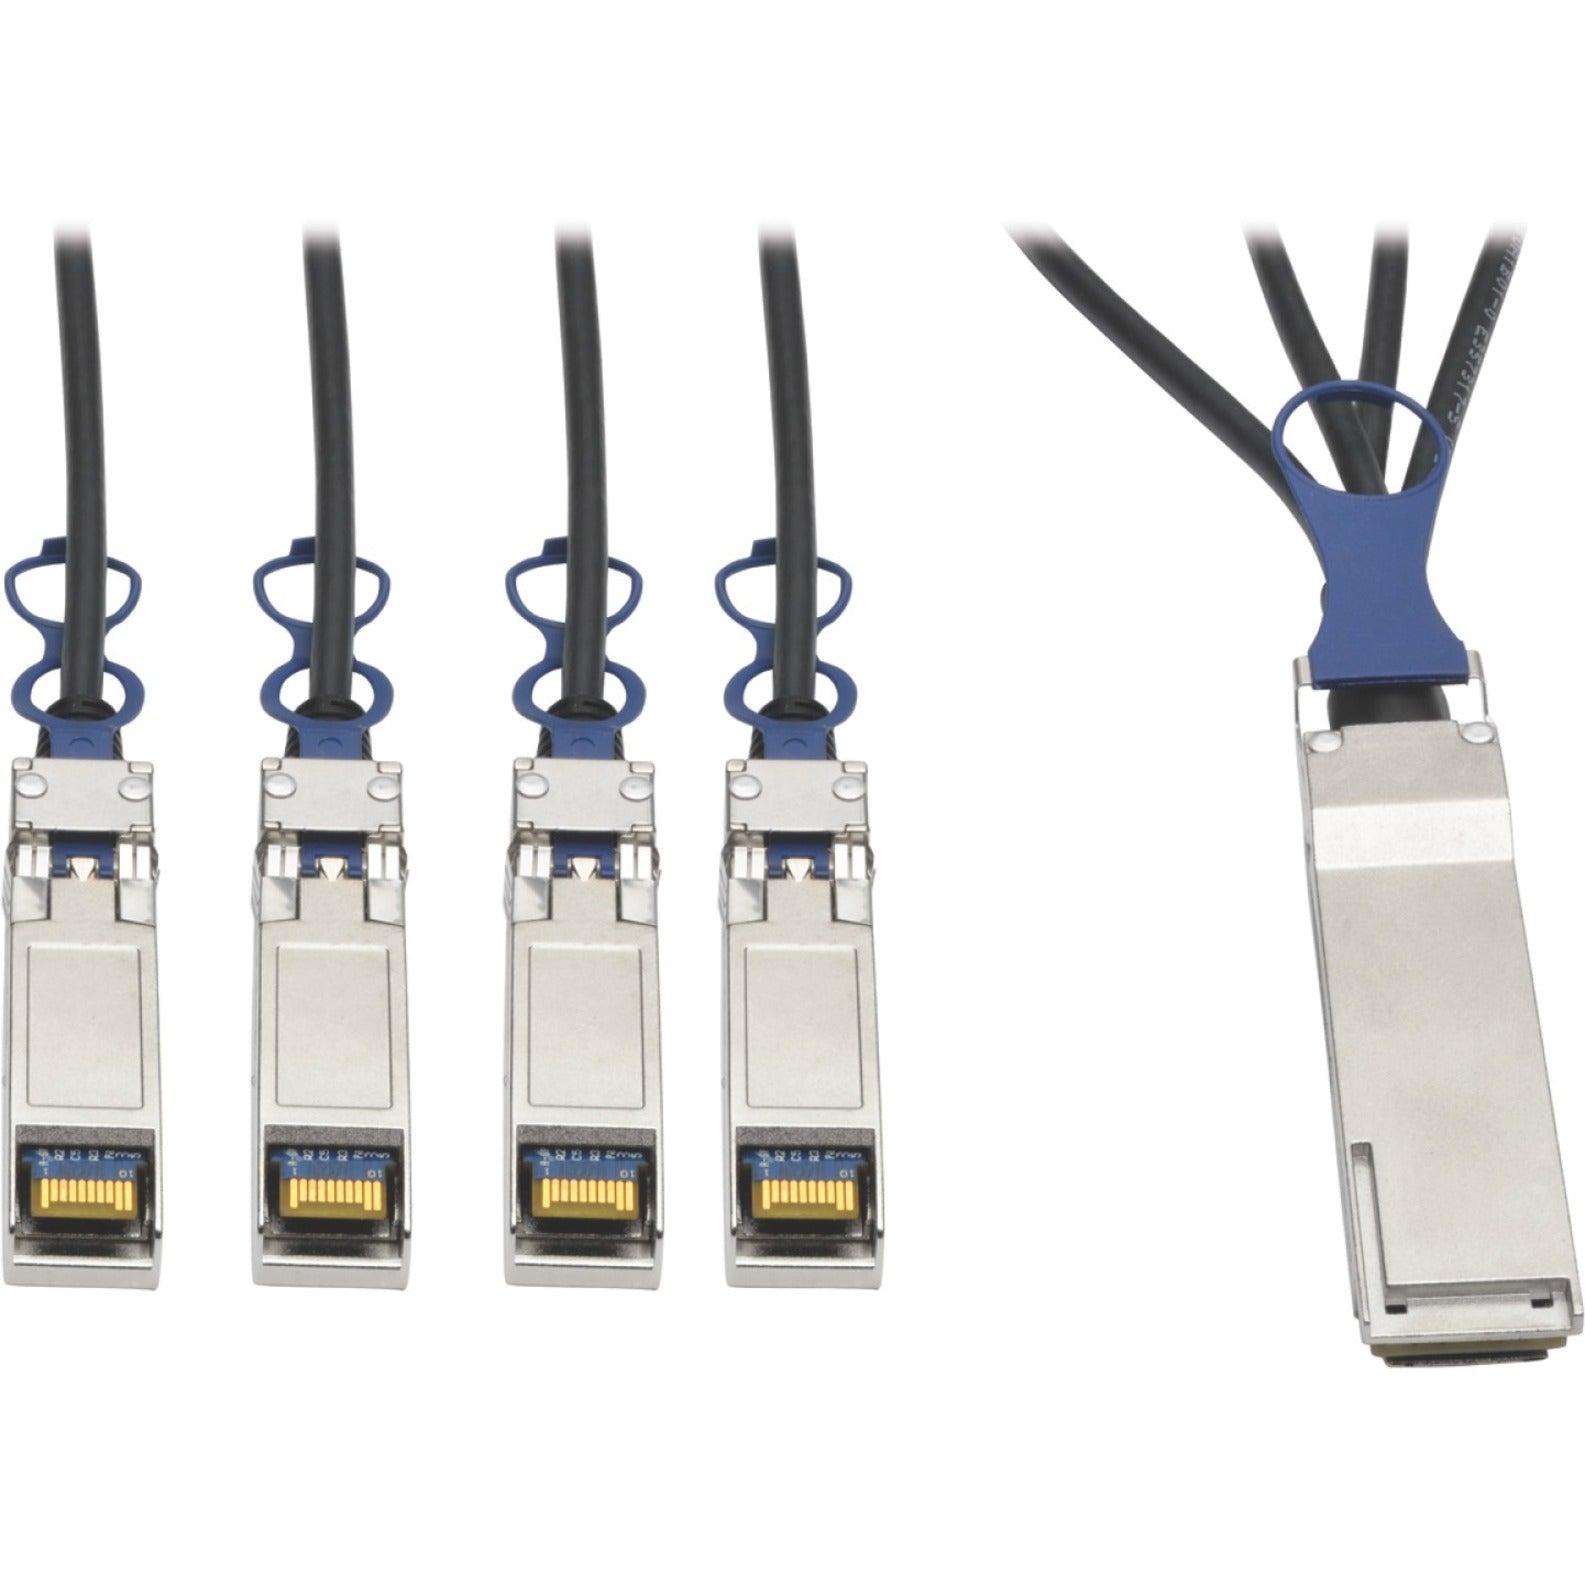 Tripp Lite N281-03M-BK QSFP+/SFP+ Câble Réseau 10 pi. Passif Flexible Protection EMI/RF Protection Crosstalk